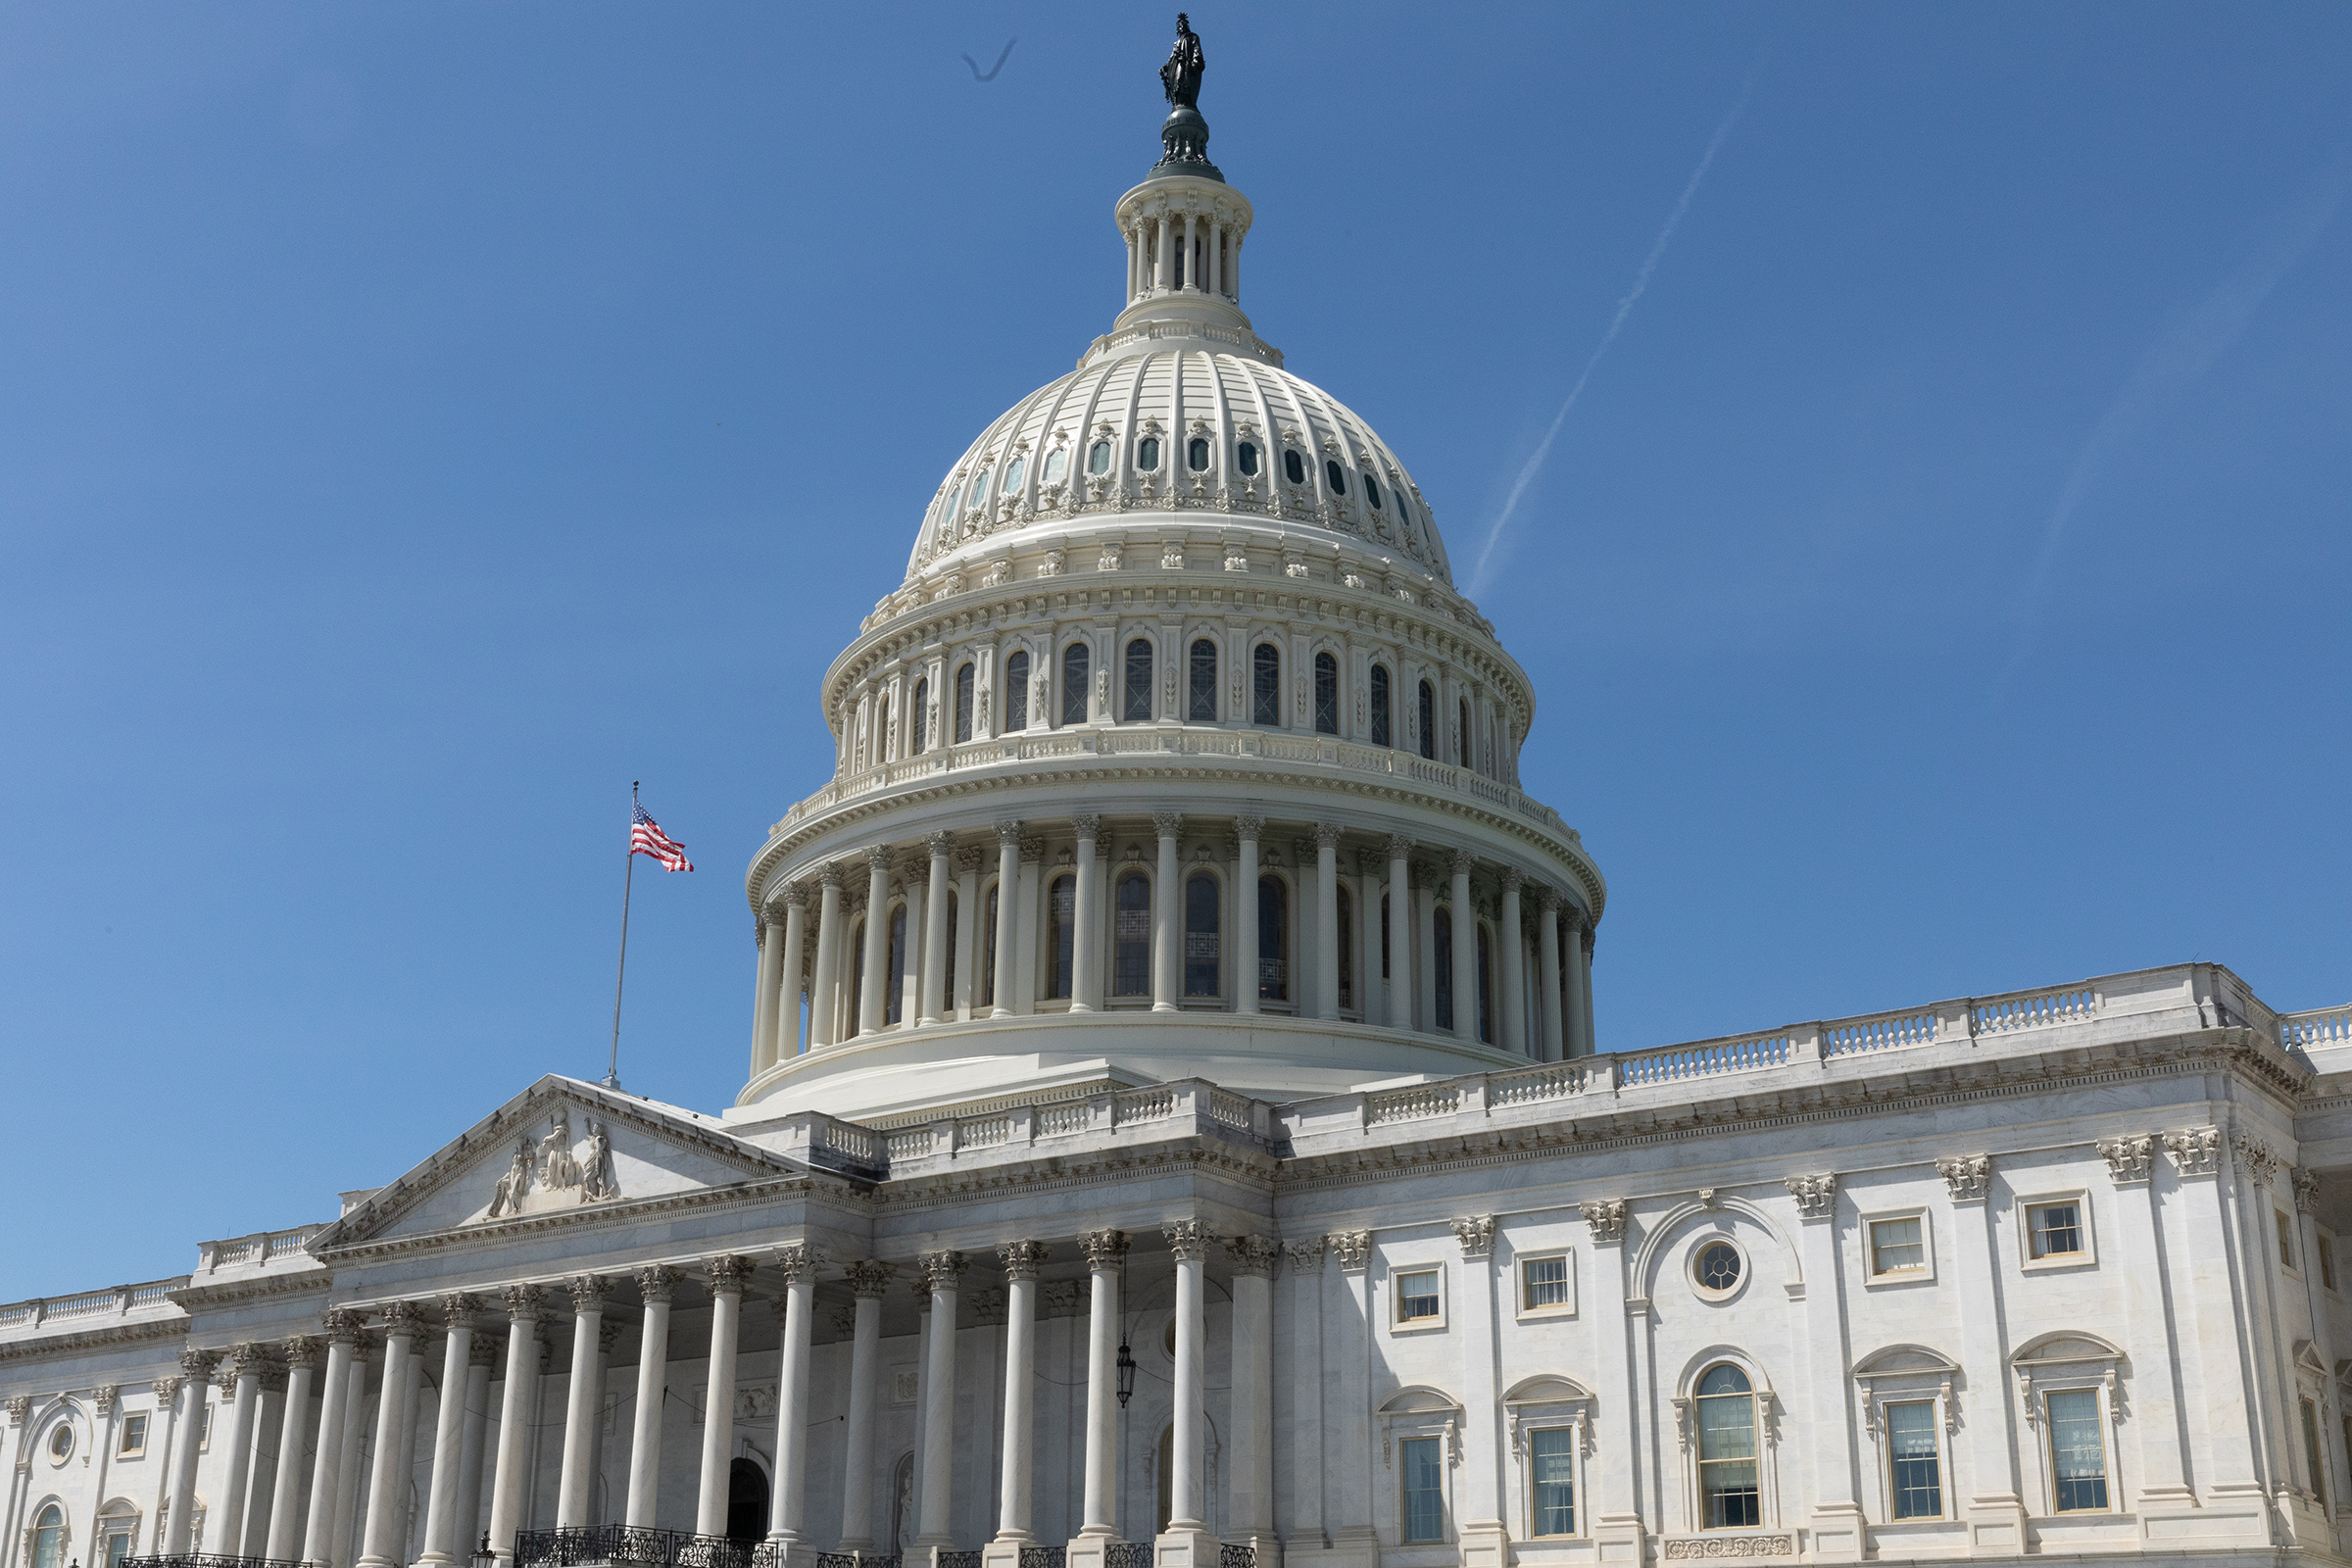 The U.S. Congress is seen in Washington D.C. on April 23, 2019. (Aurora Samperio—NurPhoto via Getty Images)